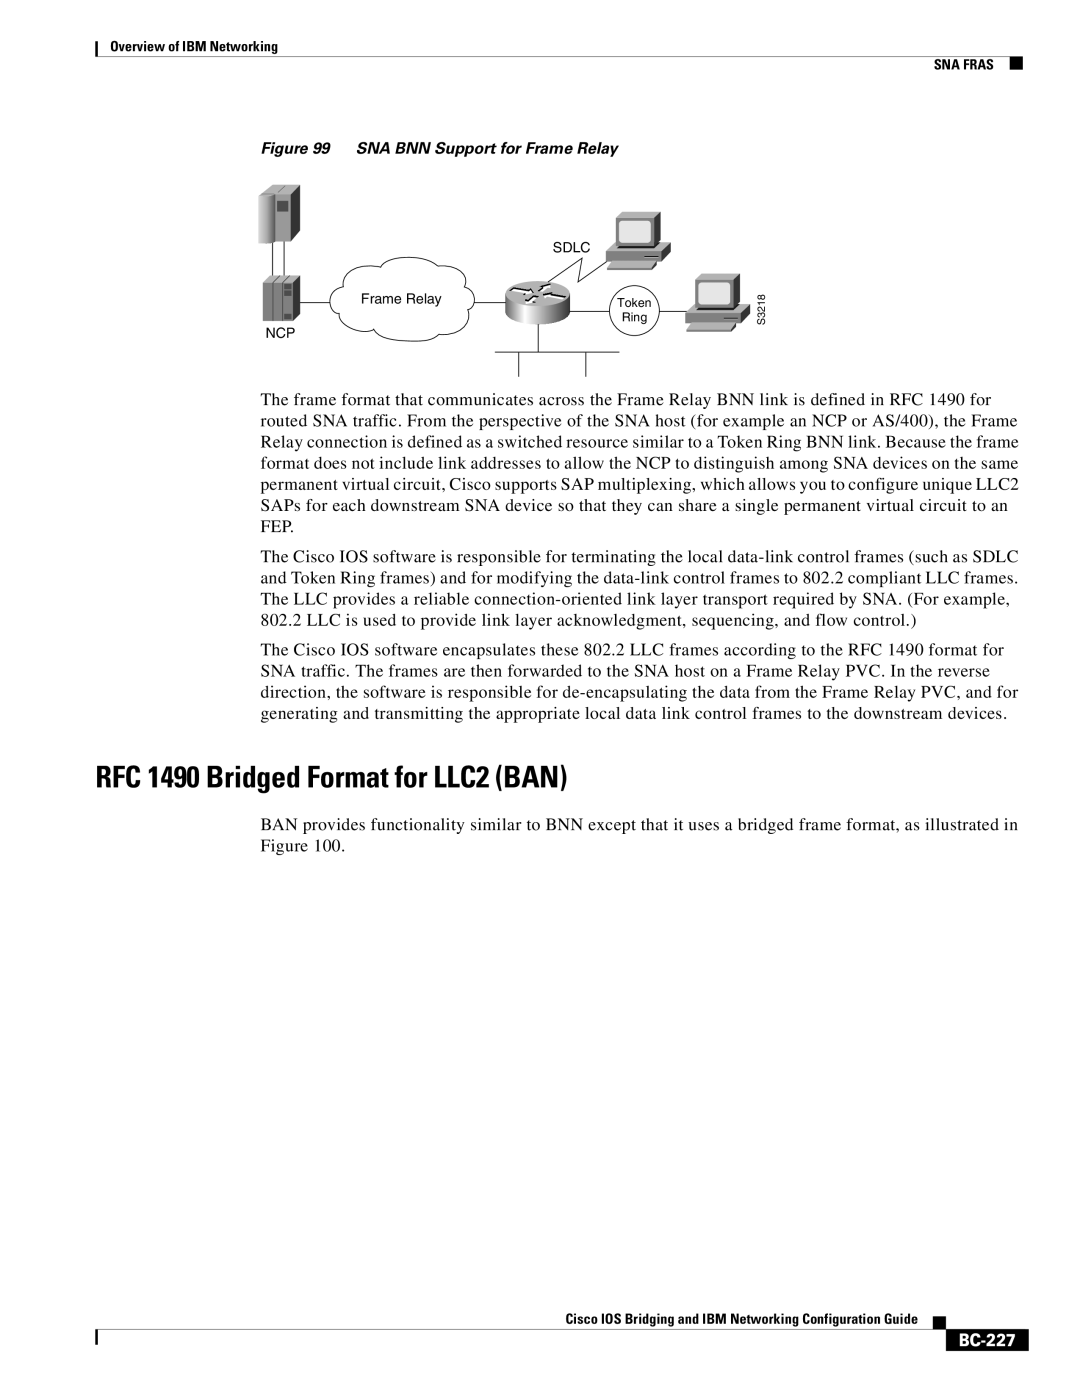 IBM BC-203 manual RFC 1490 Bridged Format for LLC2 BAN, BC-227 